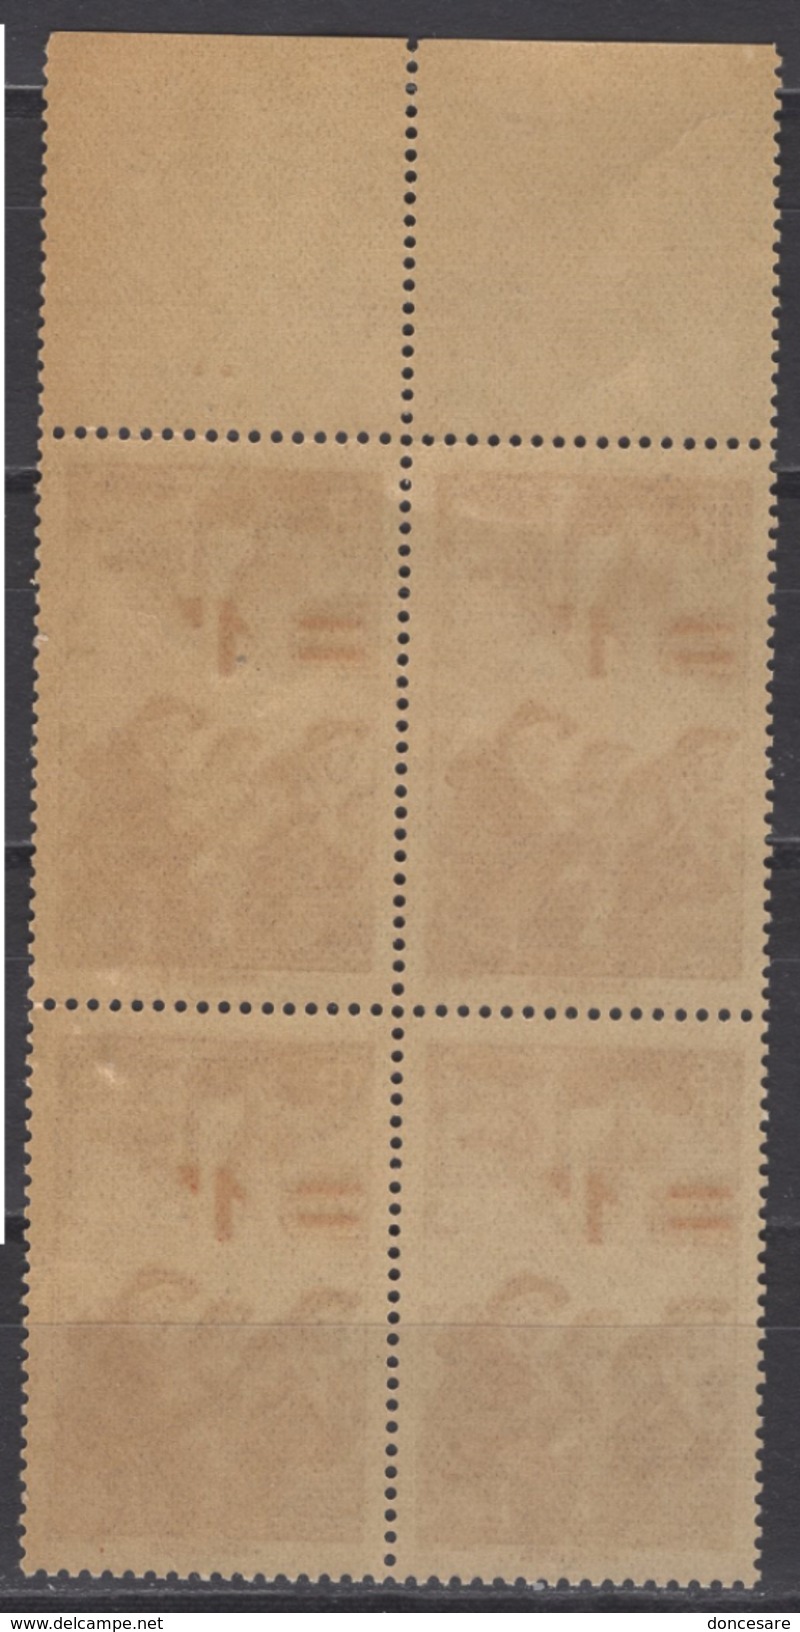 FRANCE 1941 - BLOC DE 4 TP Y.T. N° 489 - NEUFS** /W33 - Unused Stamps